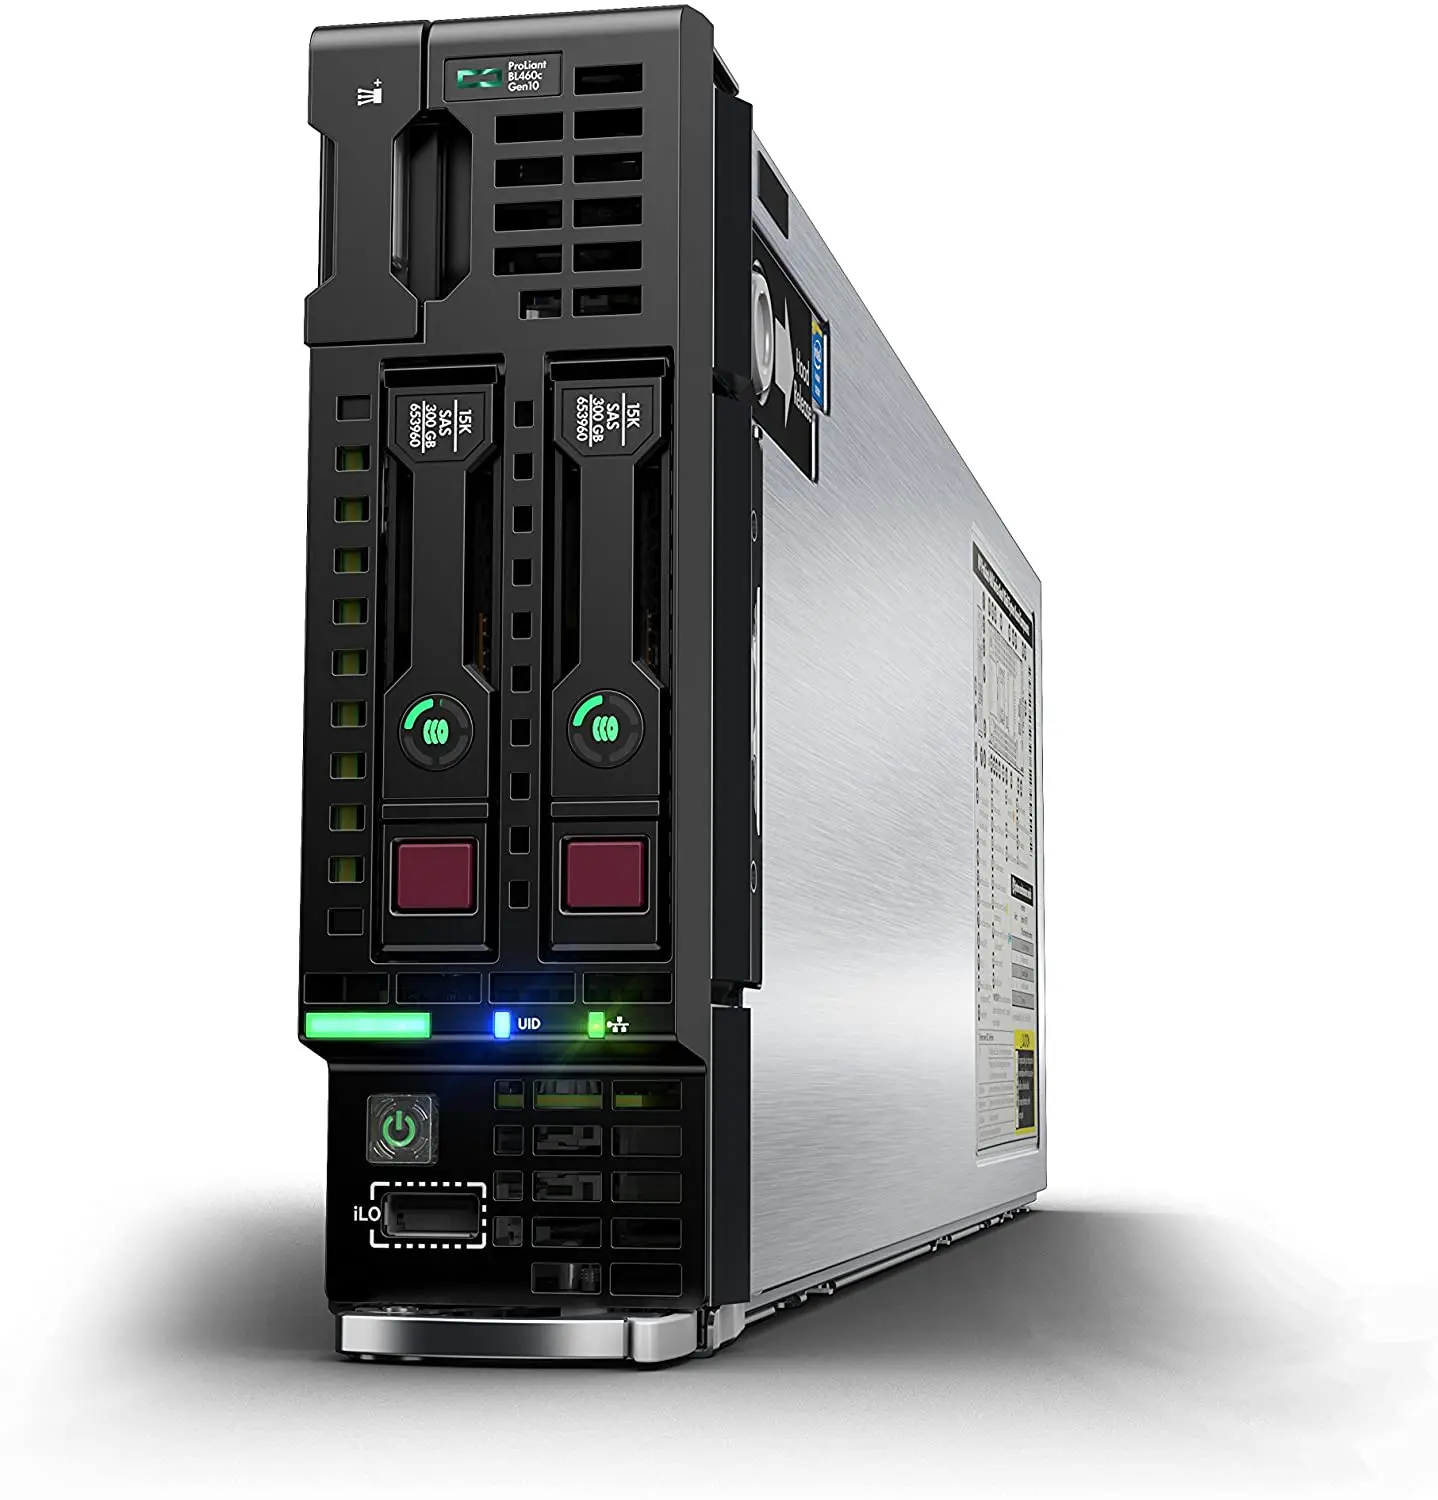 

HPE ProLiant BL460c Gen10 10Gb/20Gb FlexibleLOM Configure-to-Order Blade Server 863442-B21